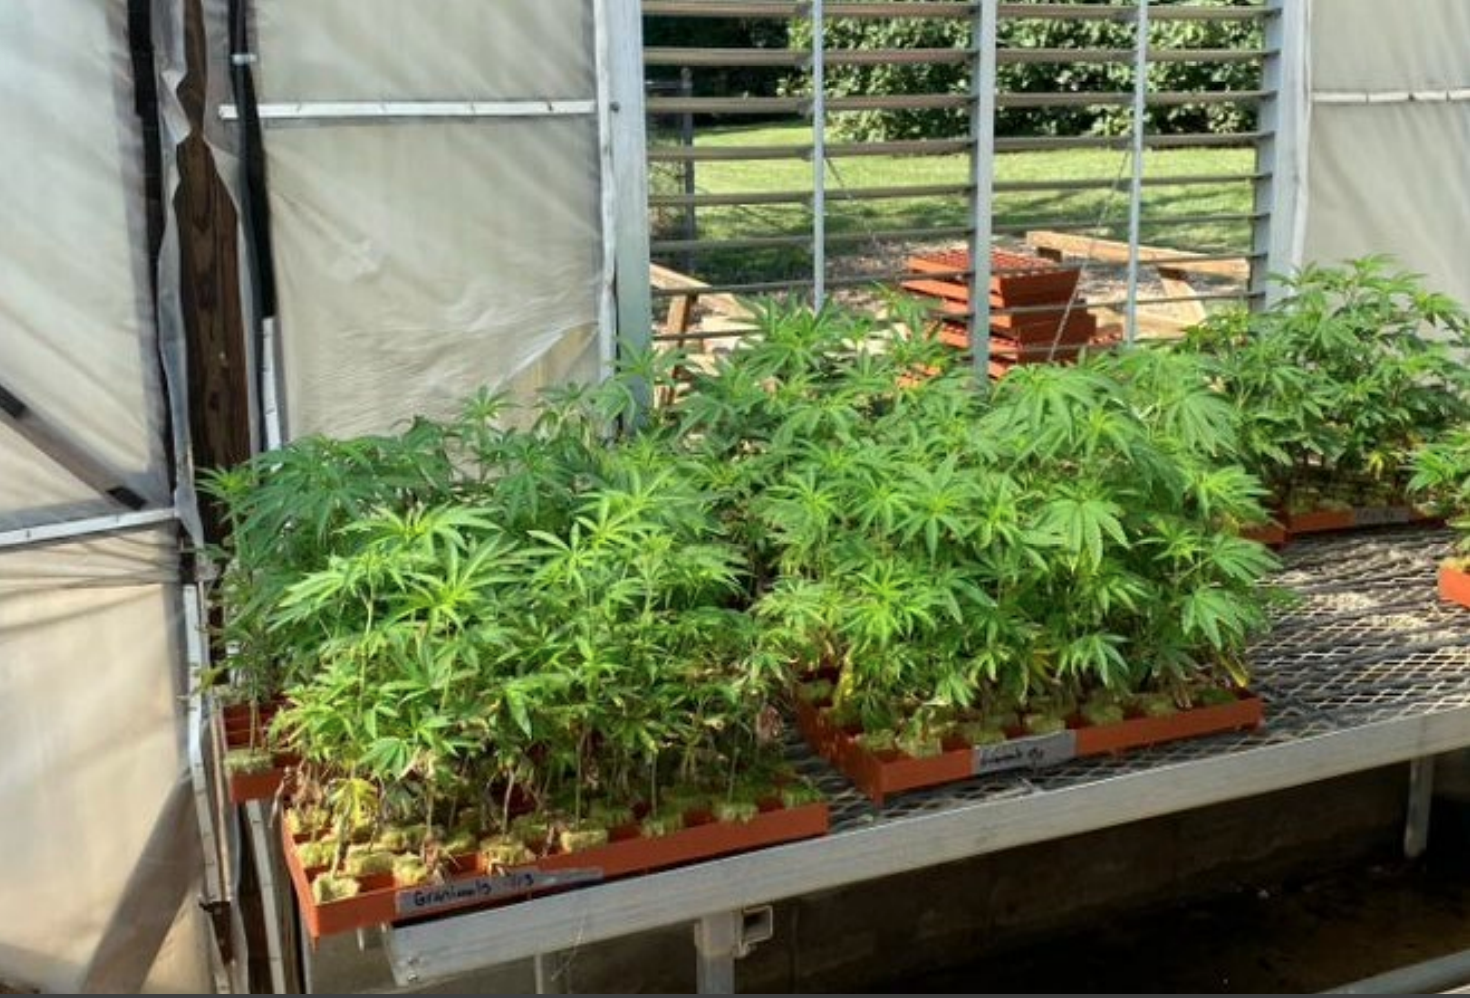 Mississippi medical marijuana regulation ‘stuck in constipation mode’